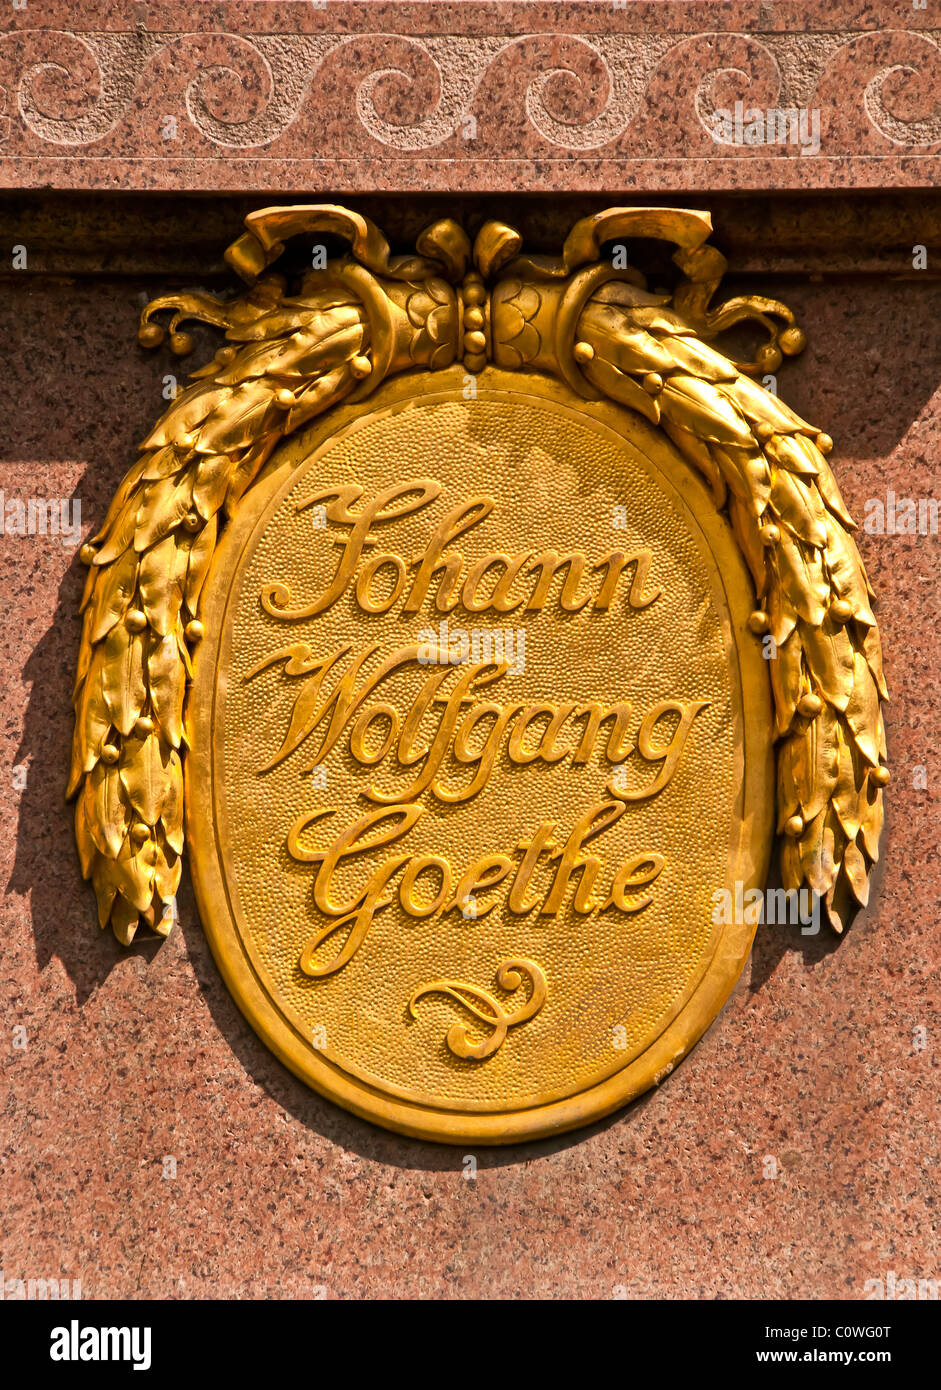 Leipzig Germany Johann Wolfgang Goethe statue base with German composer's name Stock Photo